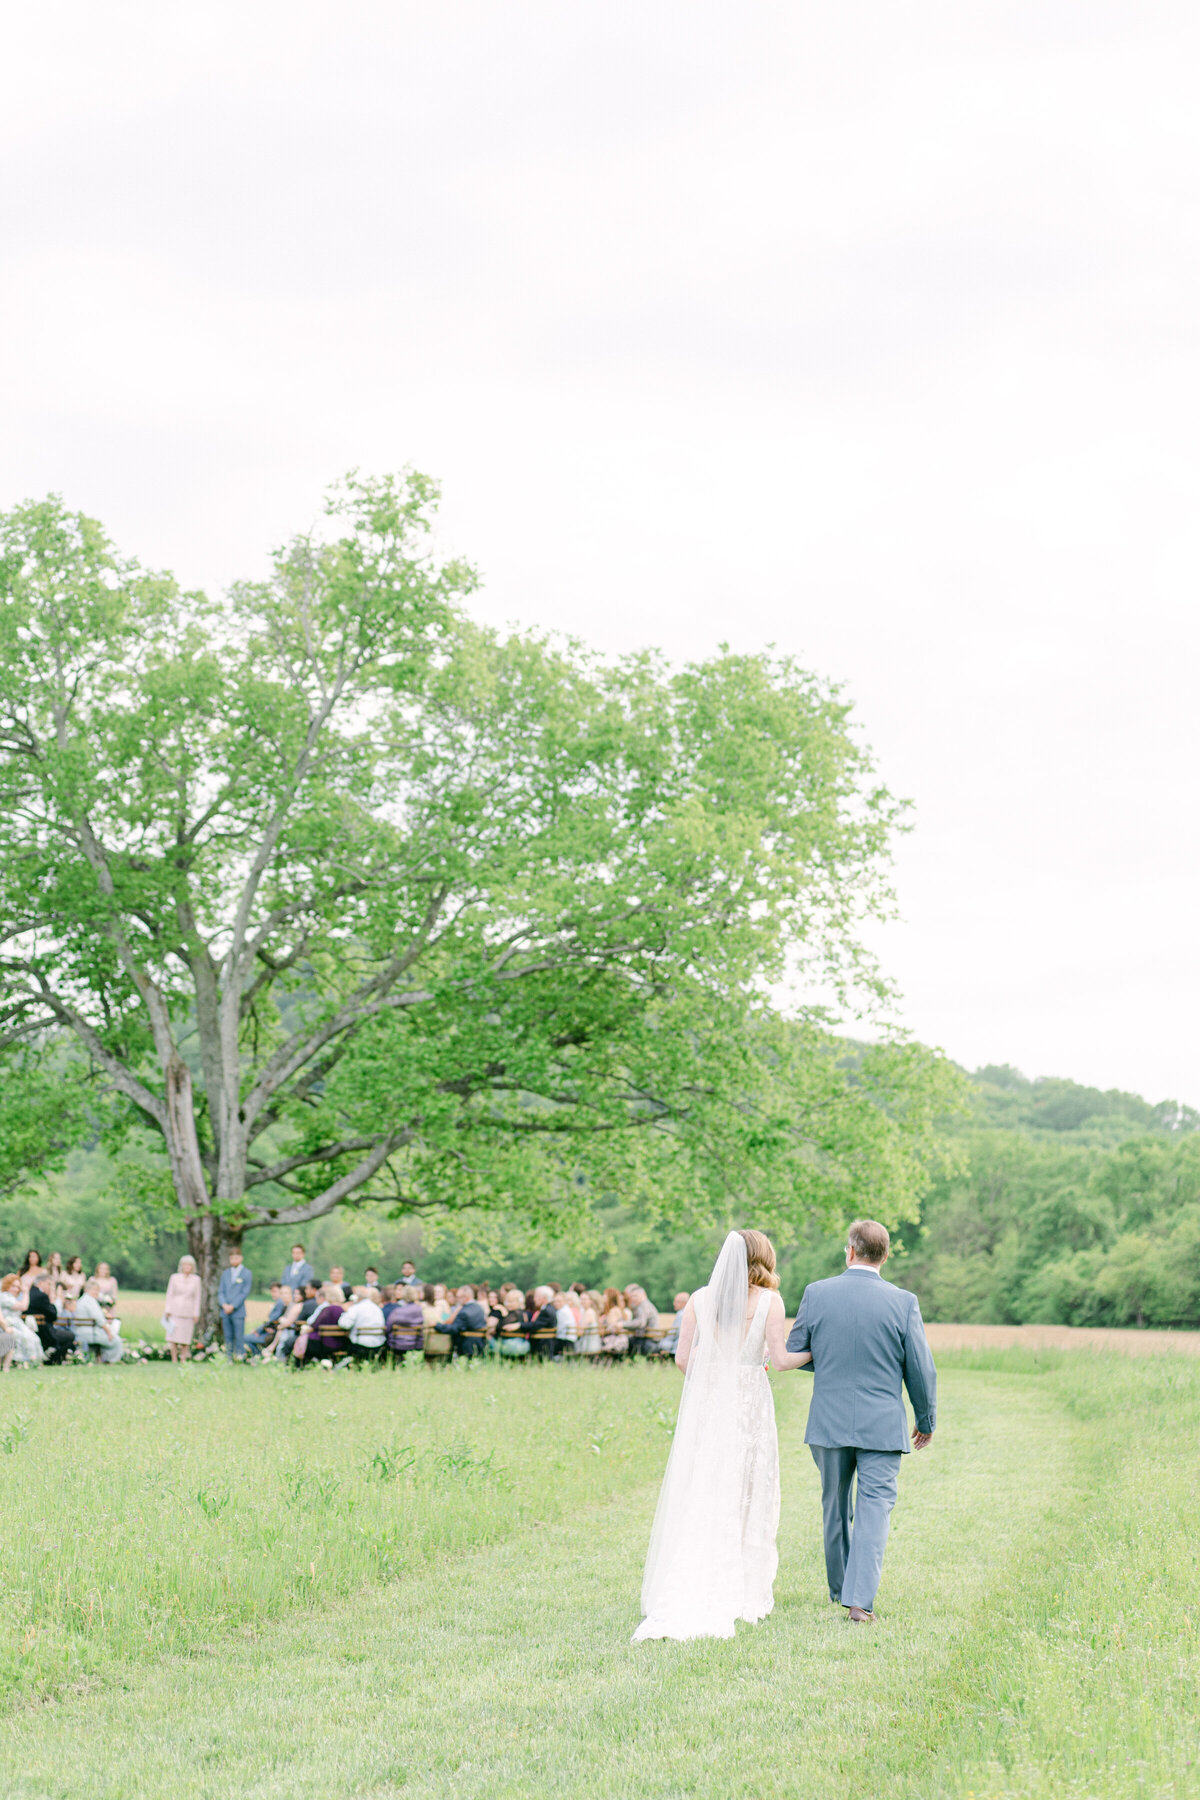 Ava-Vienneau-Nashville-Wedding-Photographer-Southall-Meadows-7